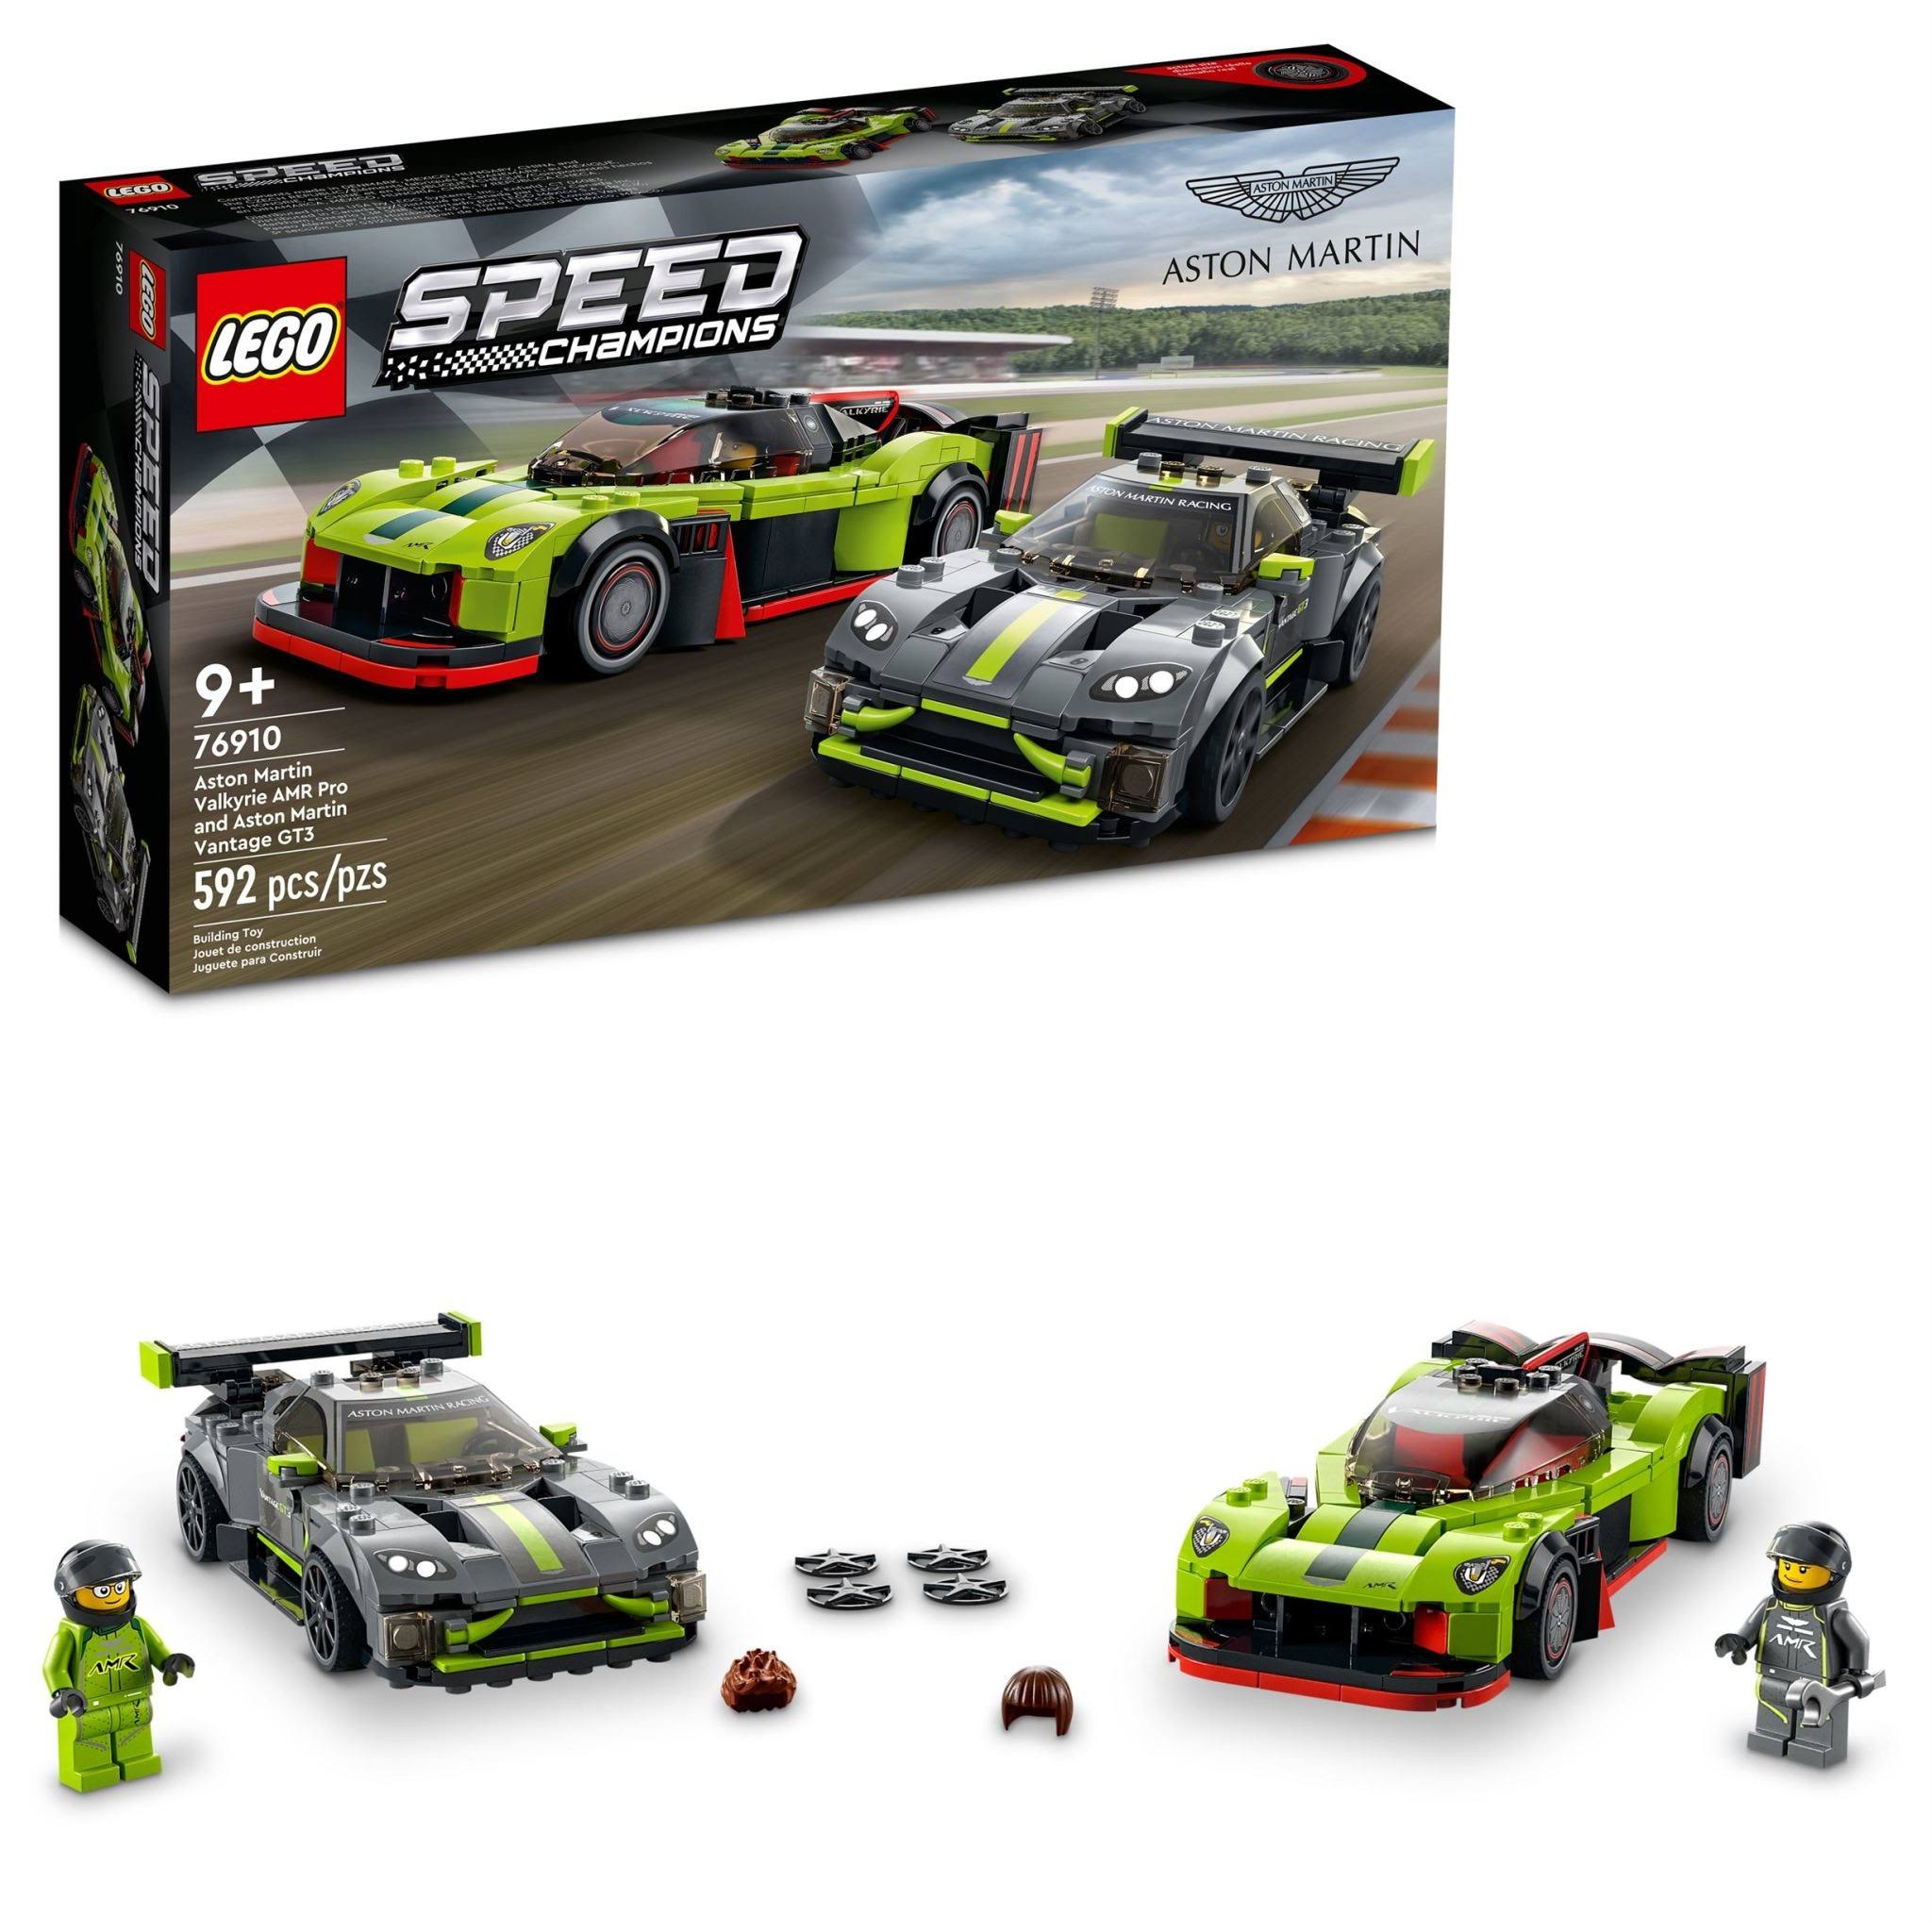 LEGO Speed Champions Aston Martin Valkyrie Amr Pro and Aston Martin